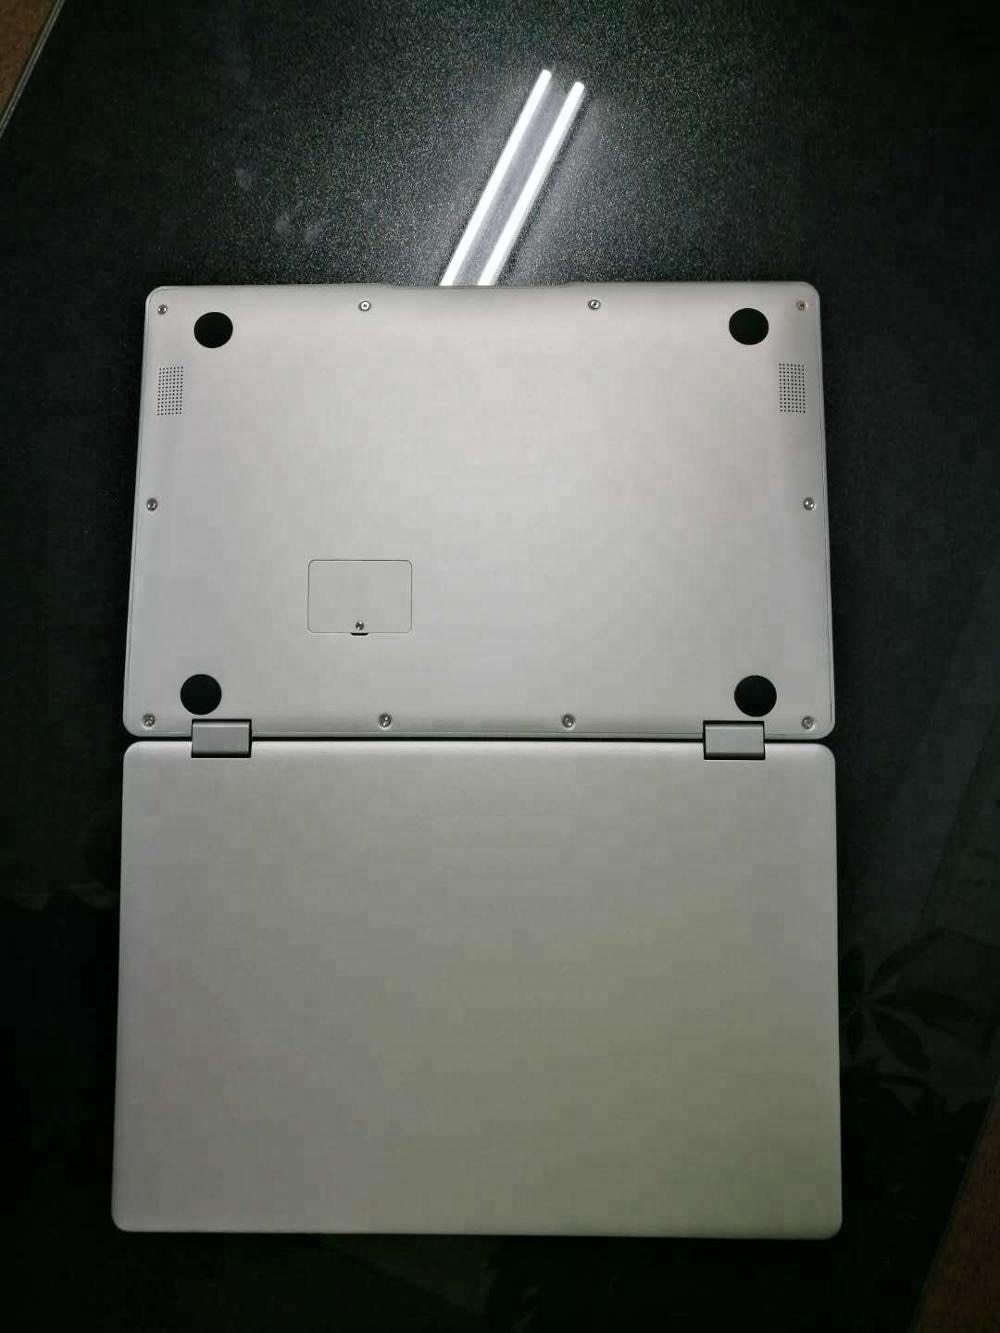 Air Laptop 13.3 inch Home Intel Core i5-8250U Quad Core 8GB 256GB Fingerprint GreatEagleInc